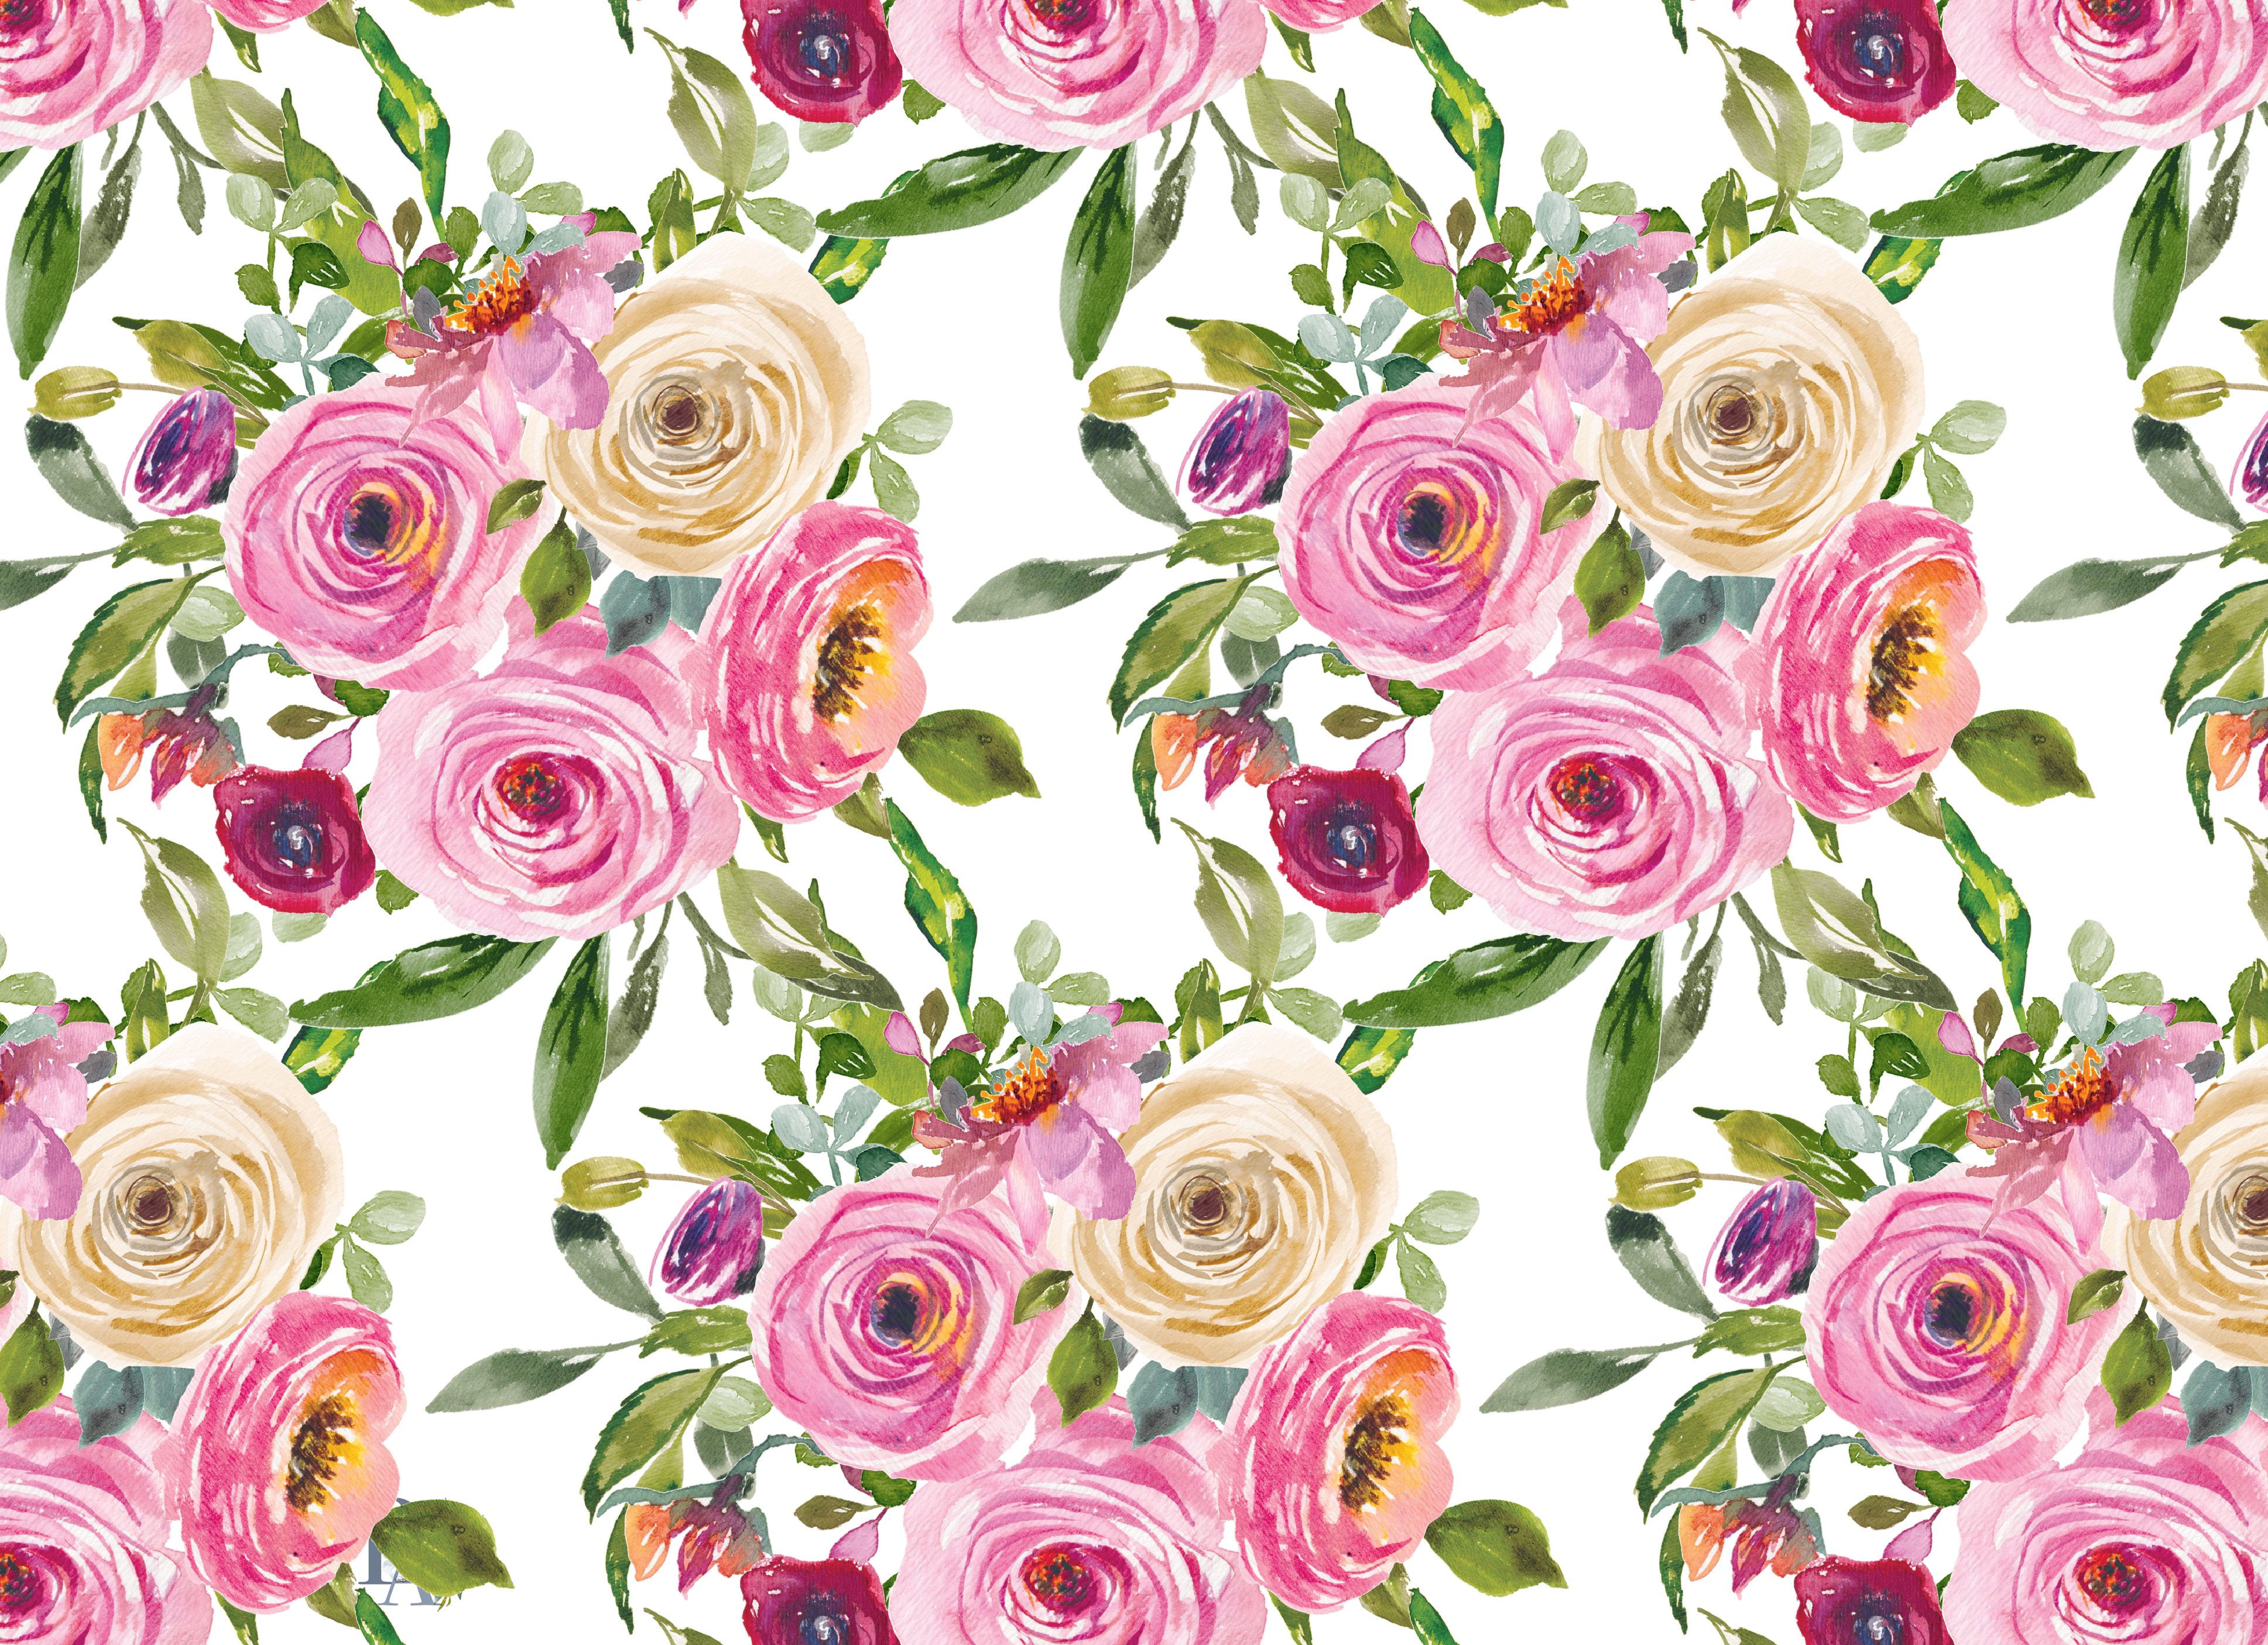 Watercolor Peach and Pink Roses Arrange | Design Bundles